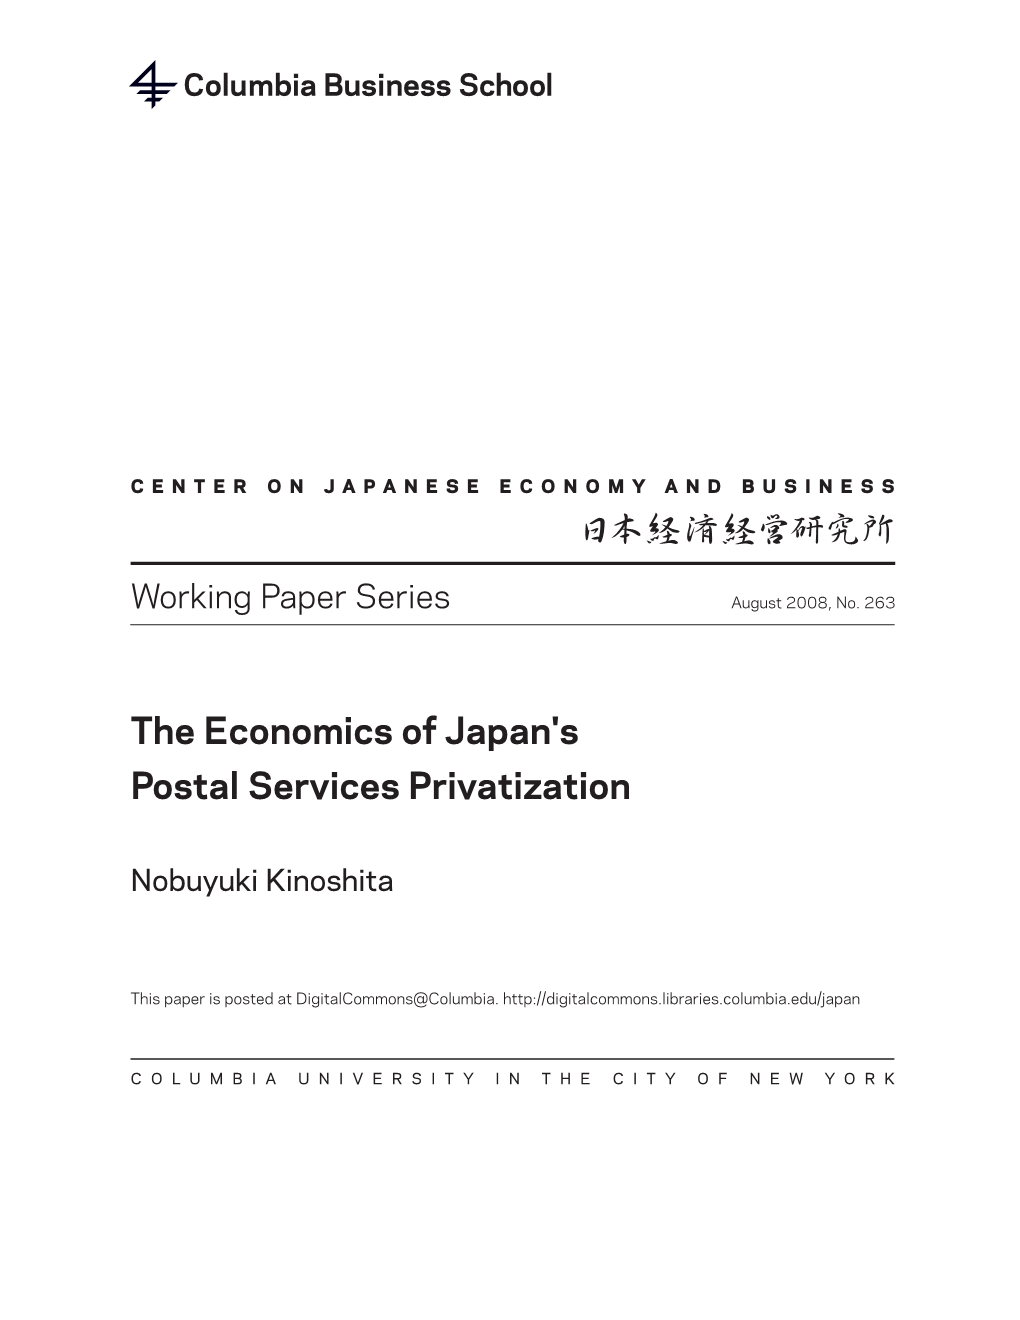 The Economics of Japan's Postal Services Privatization